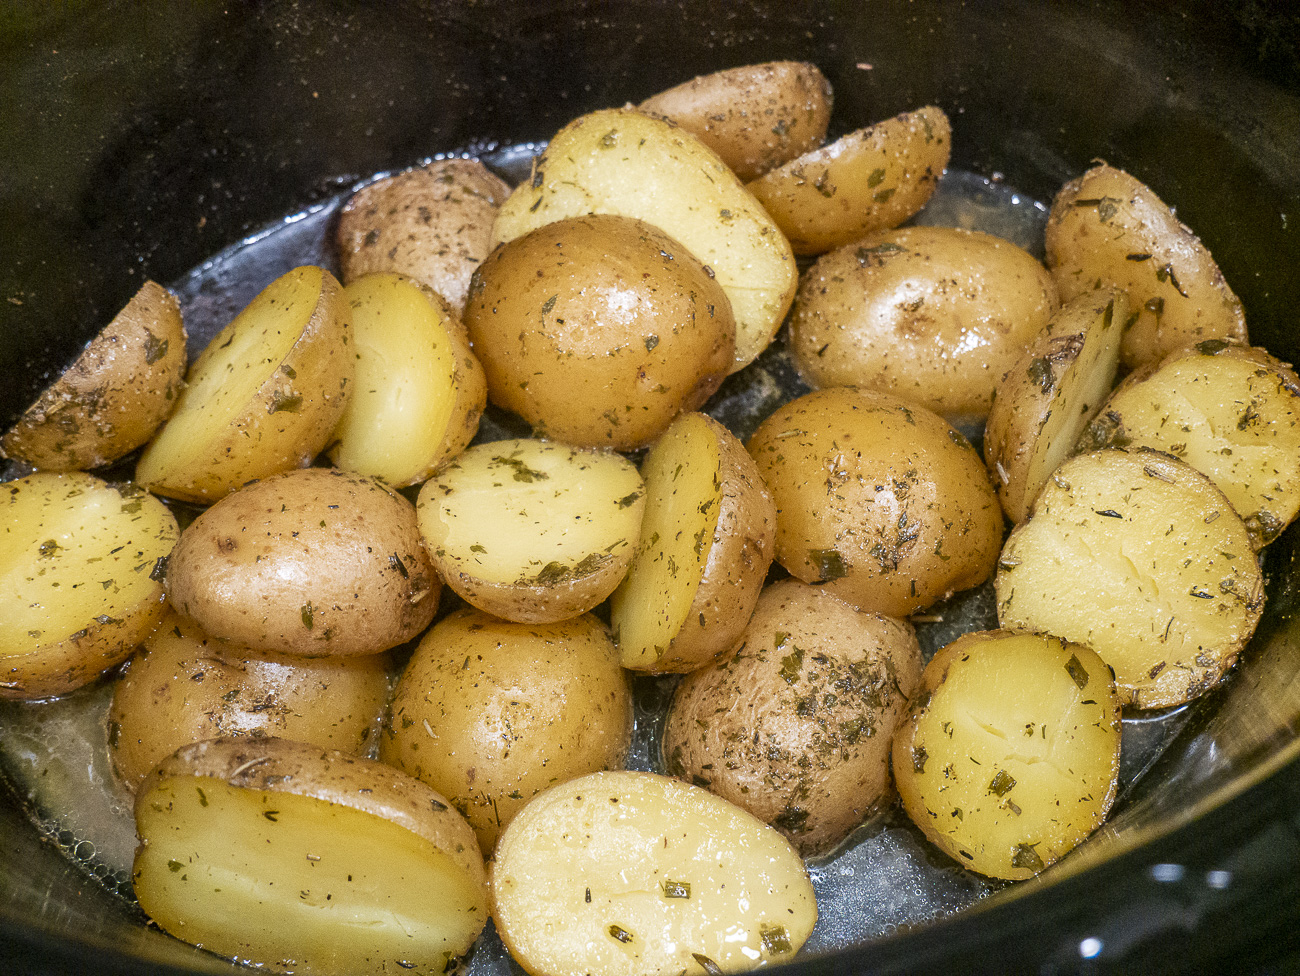 Slow Cooker Baby Potatoes